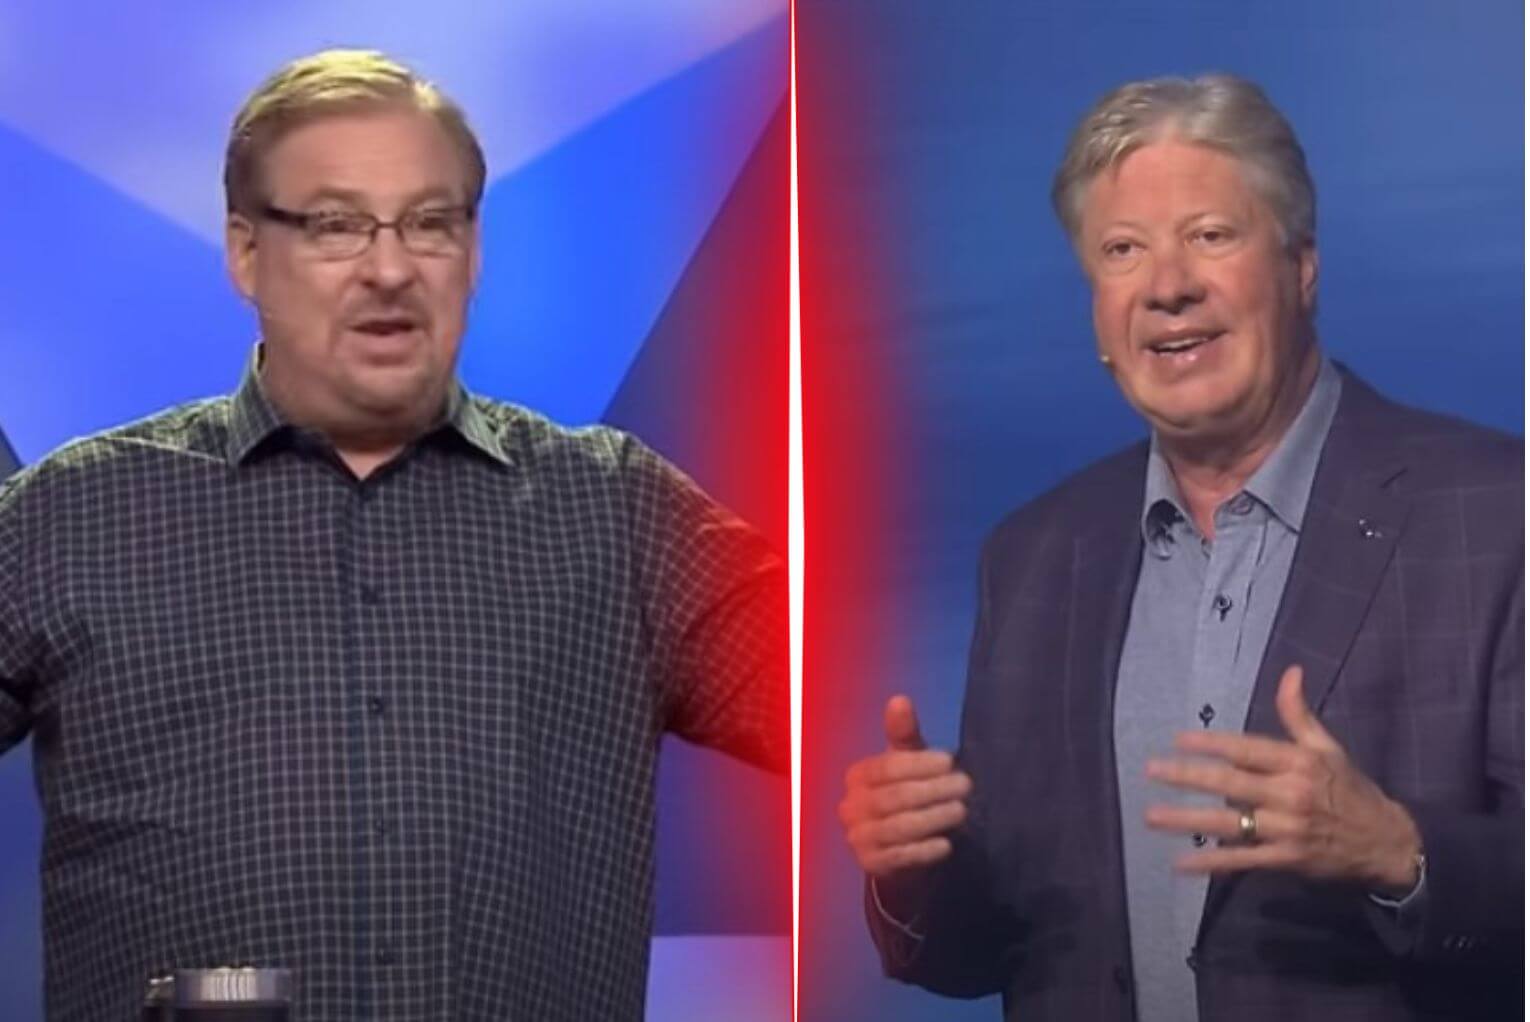 Rick Warren Slams Robert Morris on Sexual Abuse